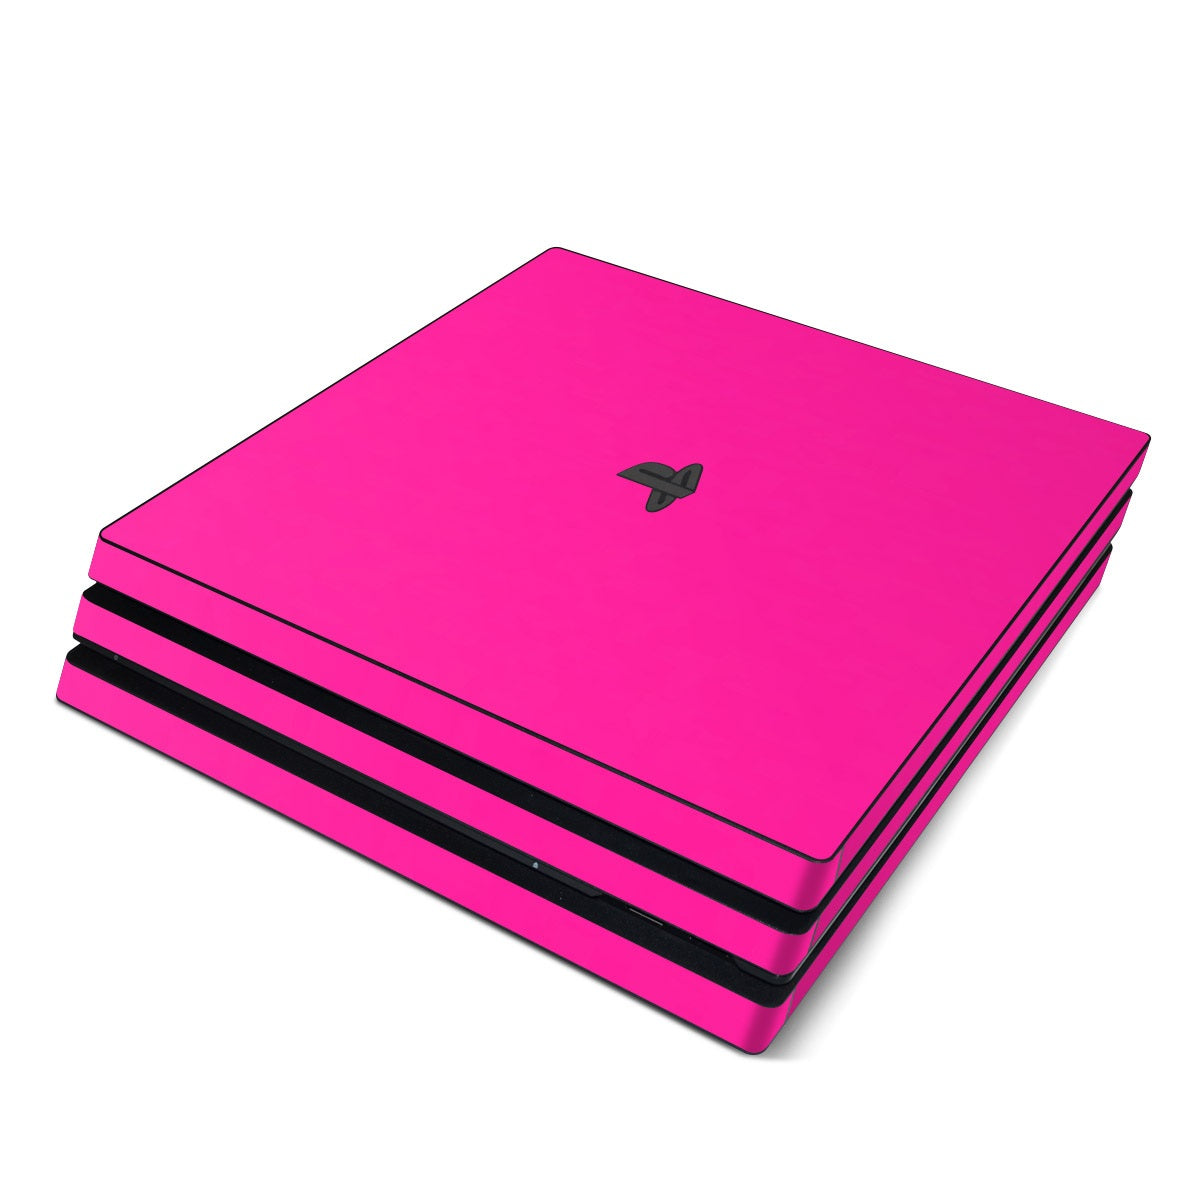 Solid State Malibu Pink - Sony PS4 Pro Skin